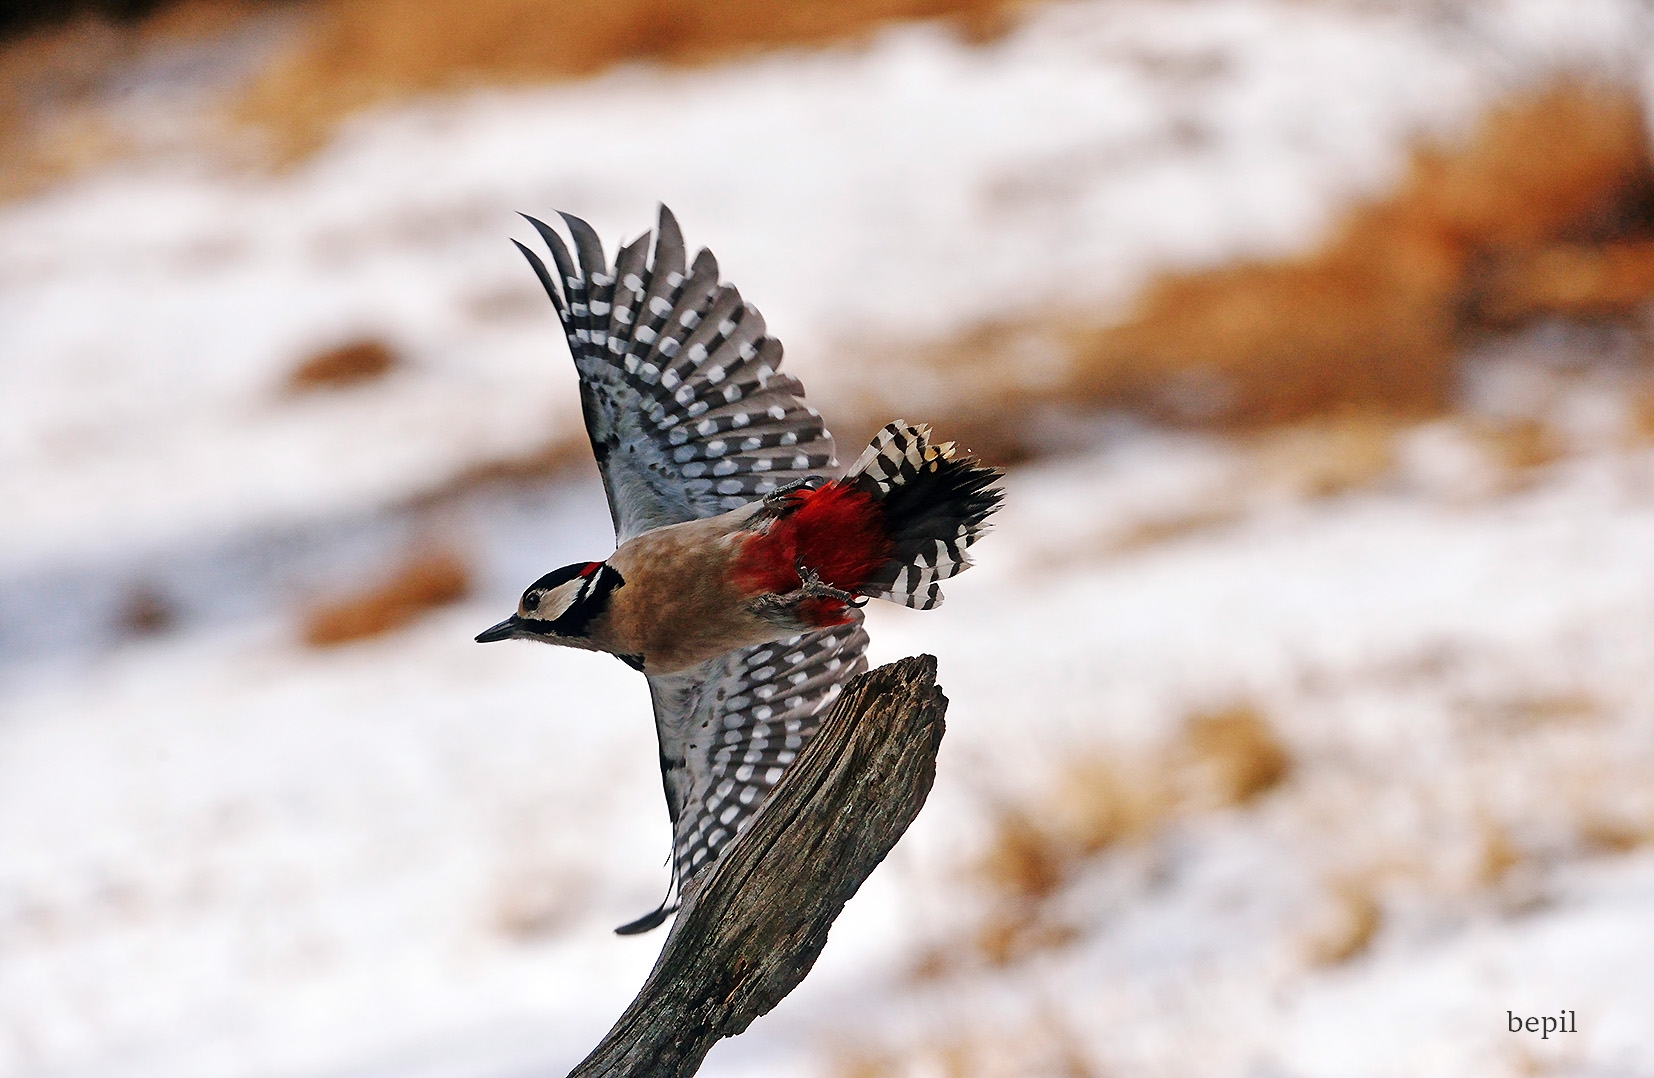 The flight of the woodpecker...